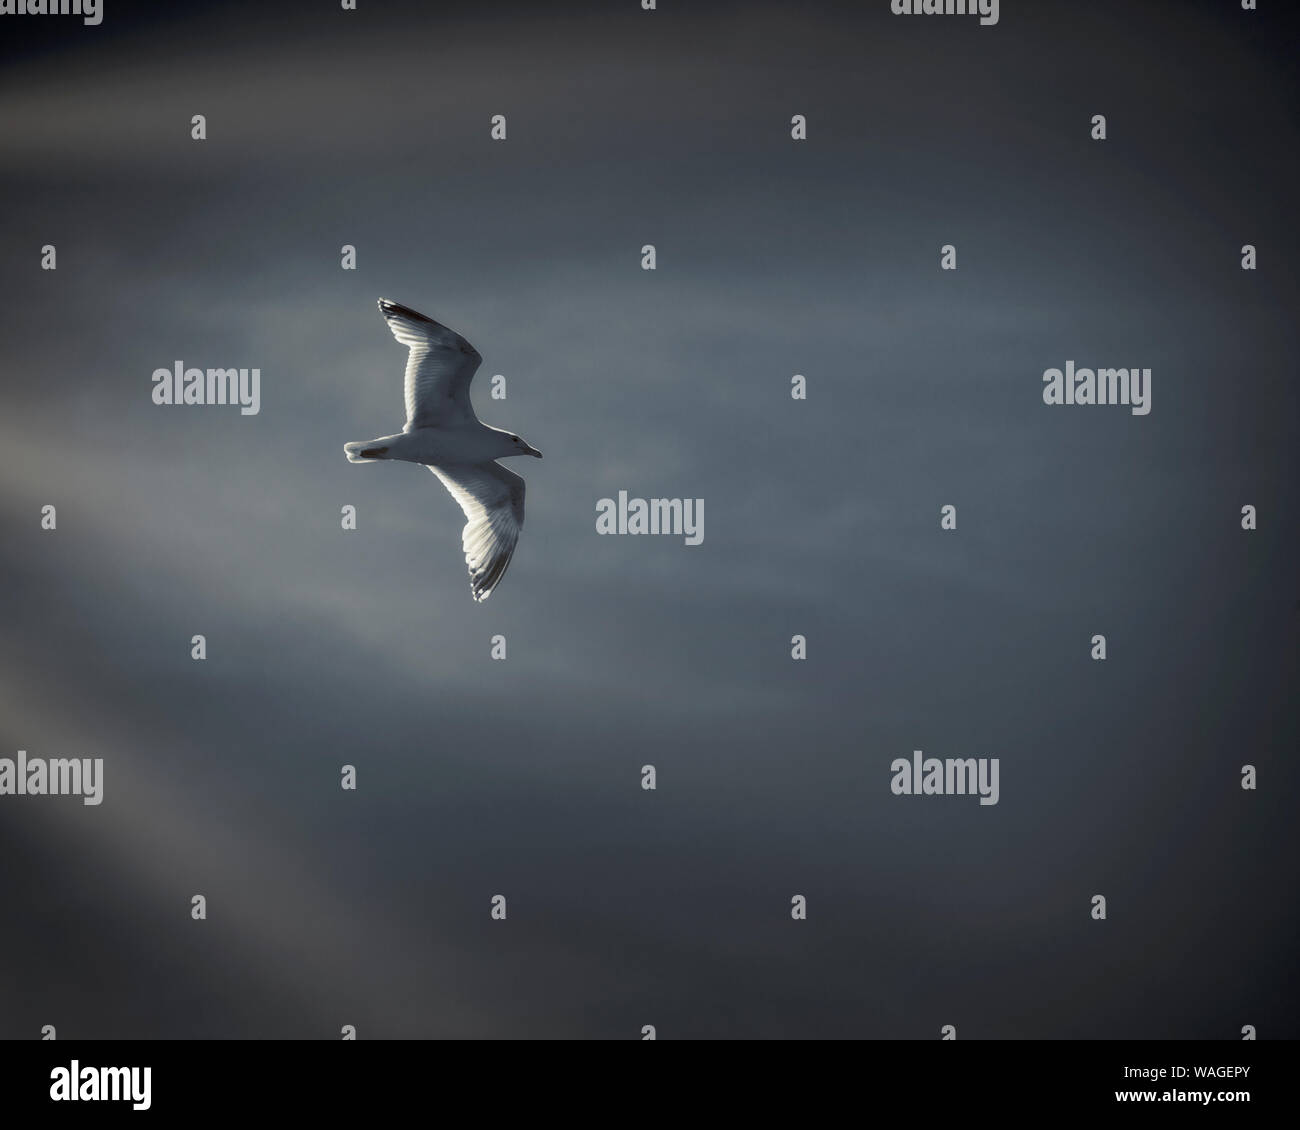 PHOTO ART: Gull Flight Stock Photo